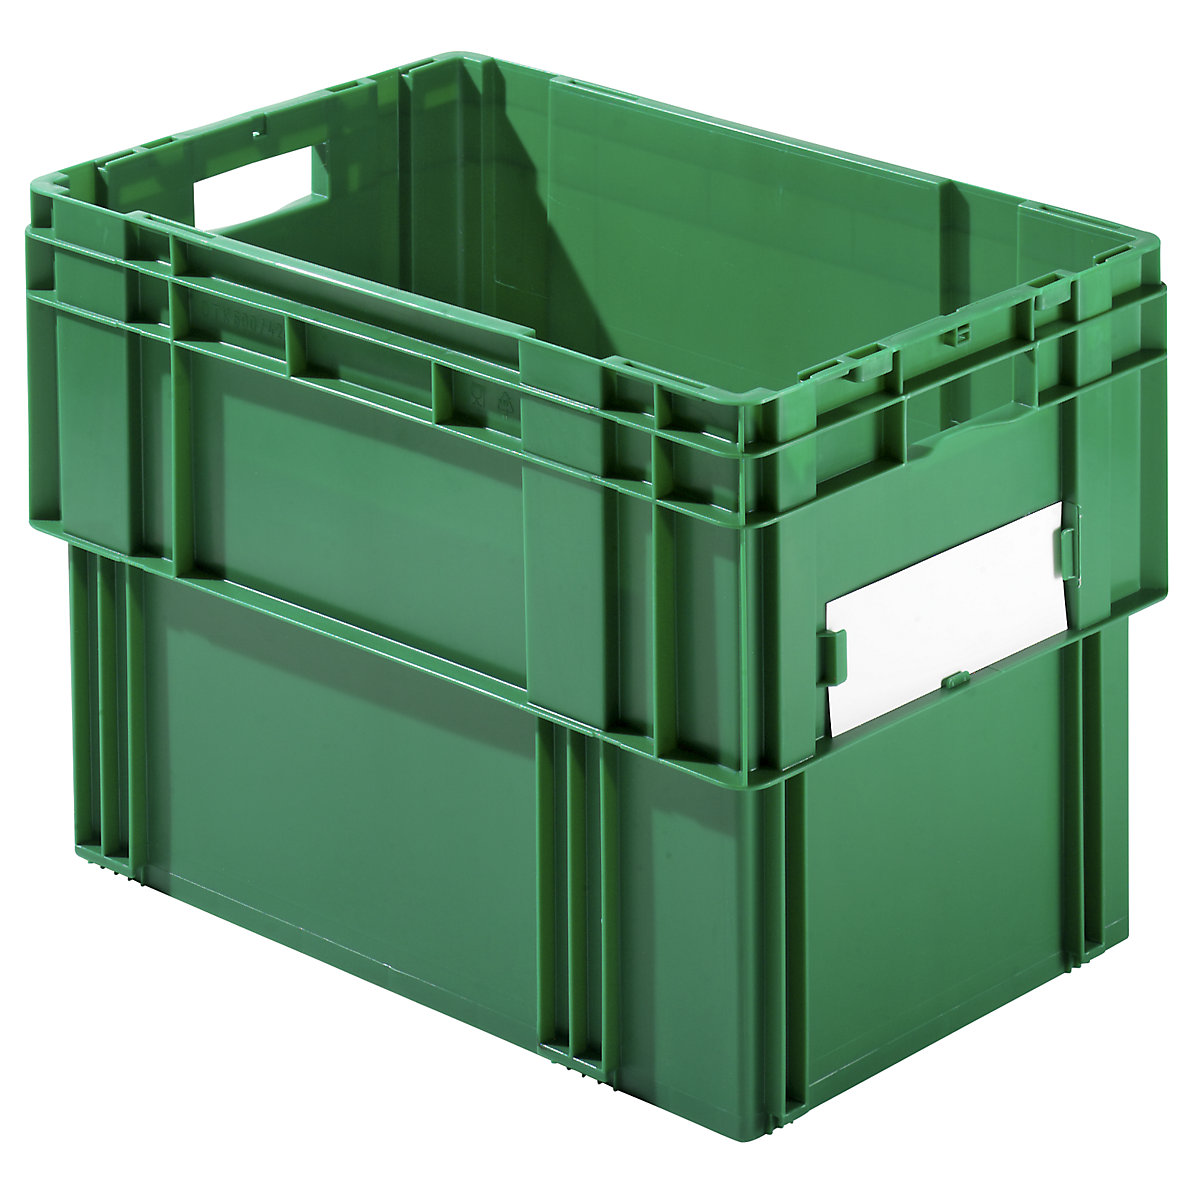 Stacking box, capacity 78 litres, solid walls and base, pack of 4, green